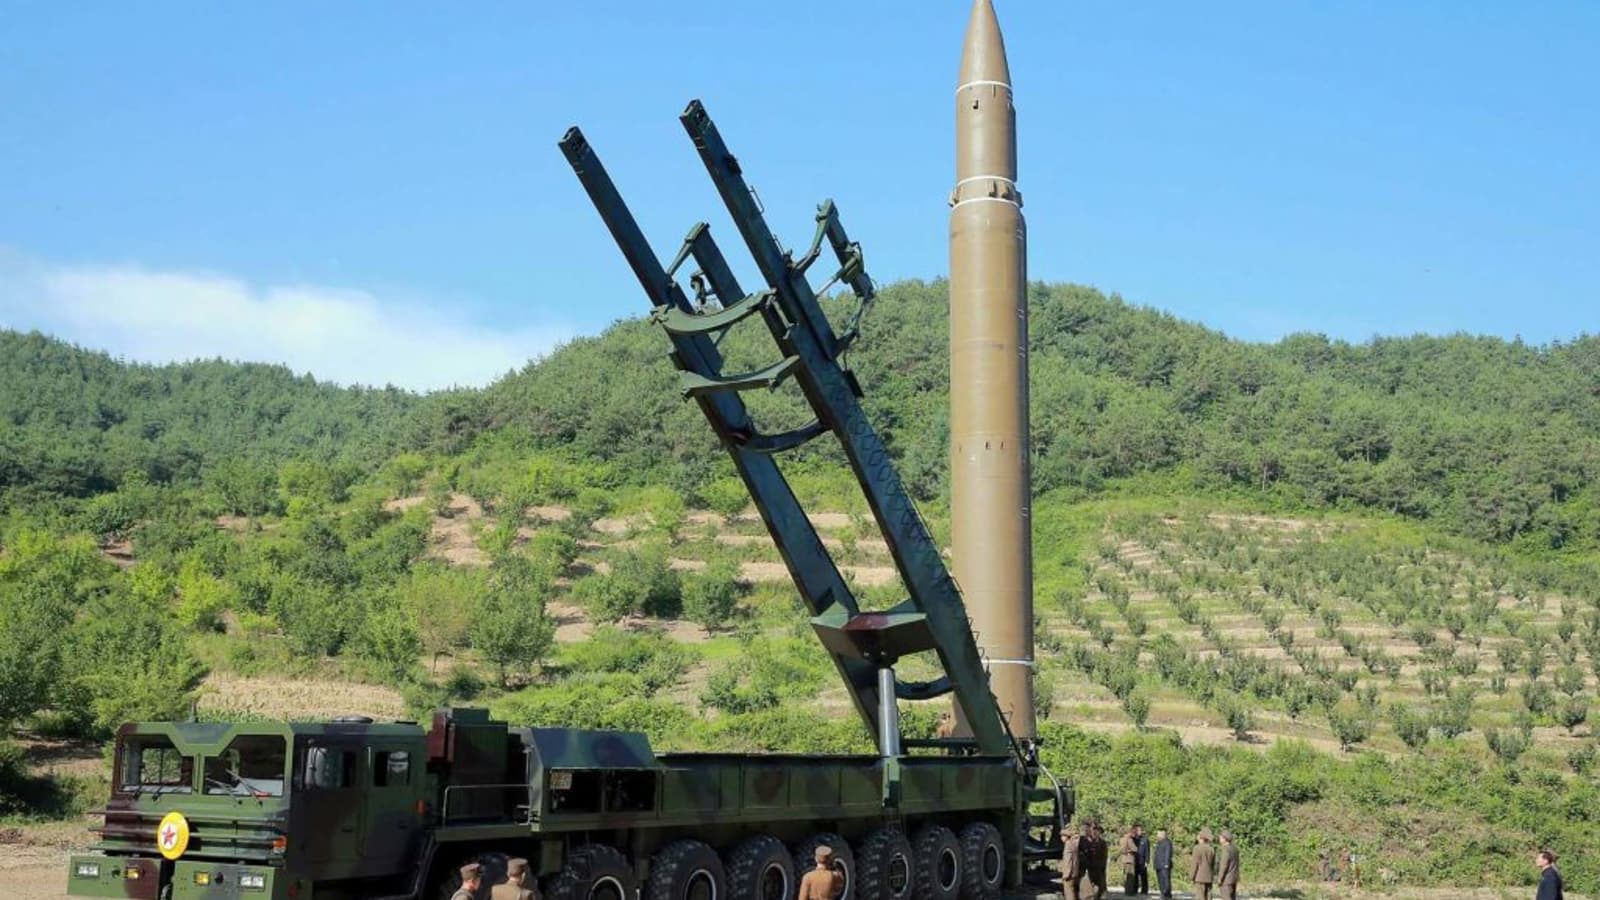 North Korea's Hwasong-15 missile is new type of ICBM, Seoul says